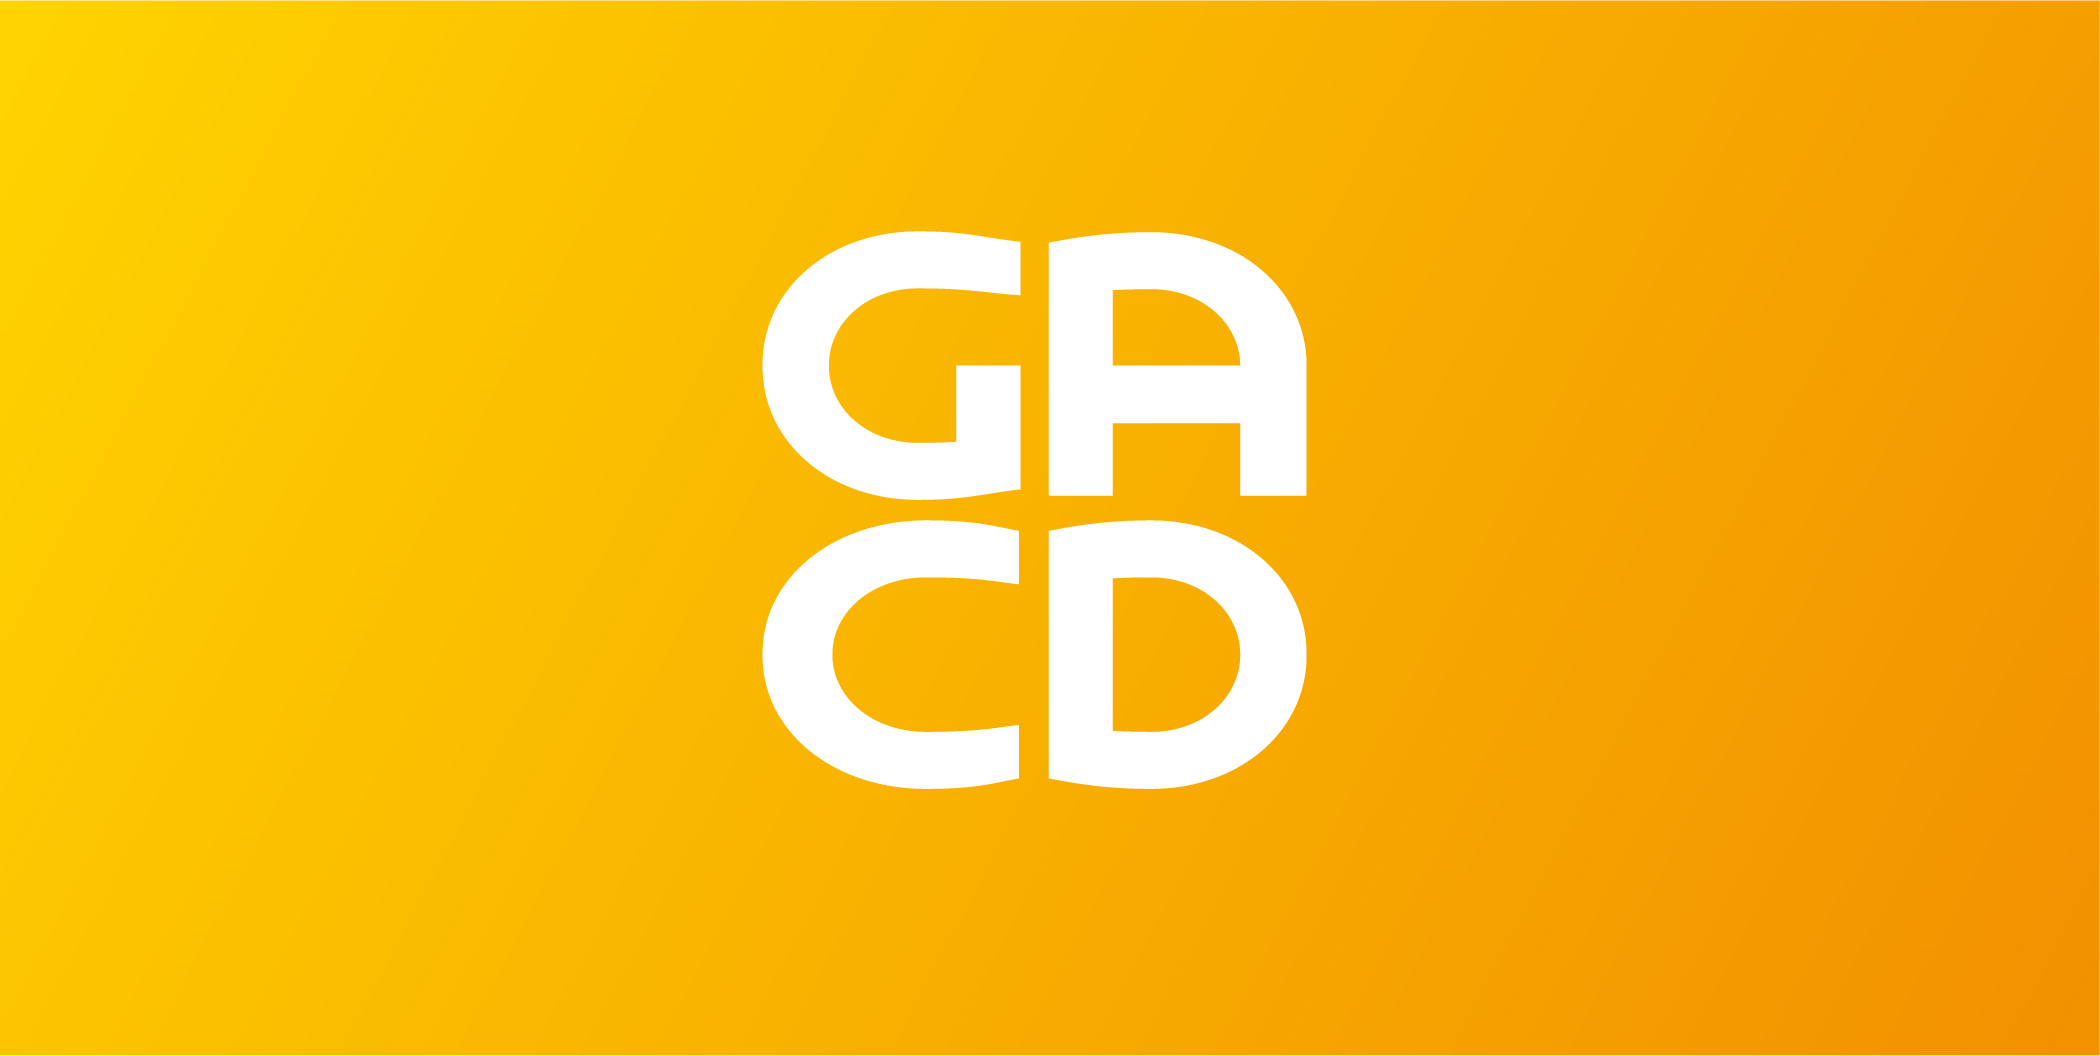 GACD logo